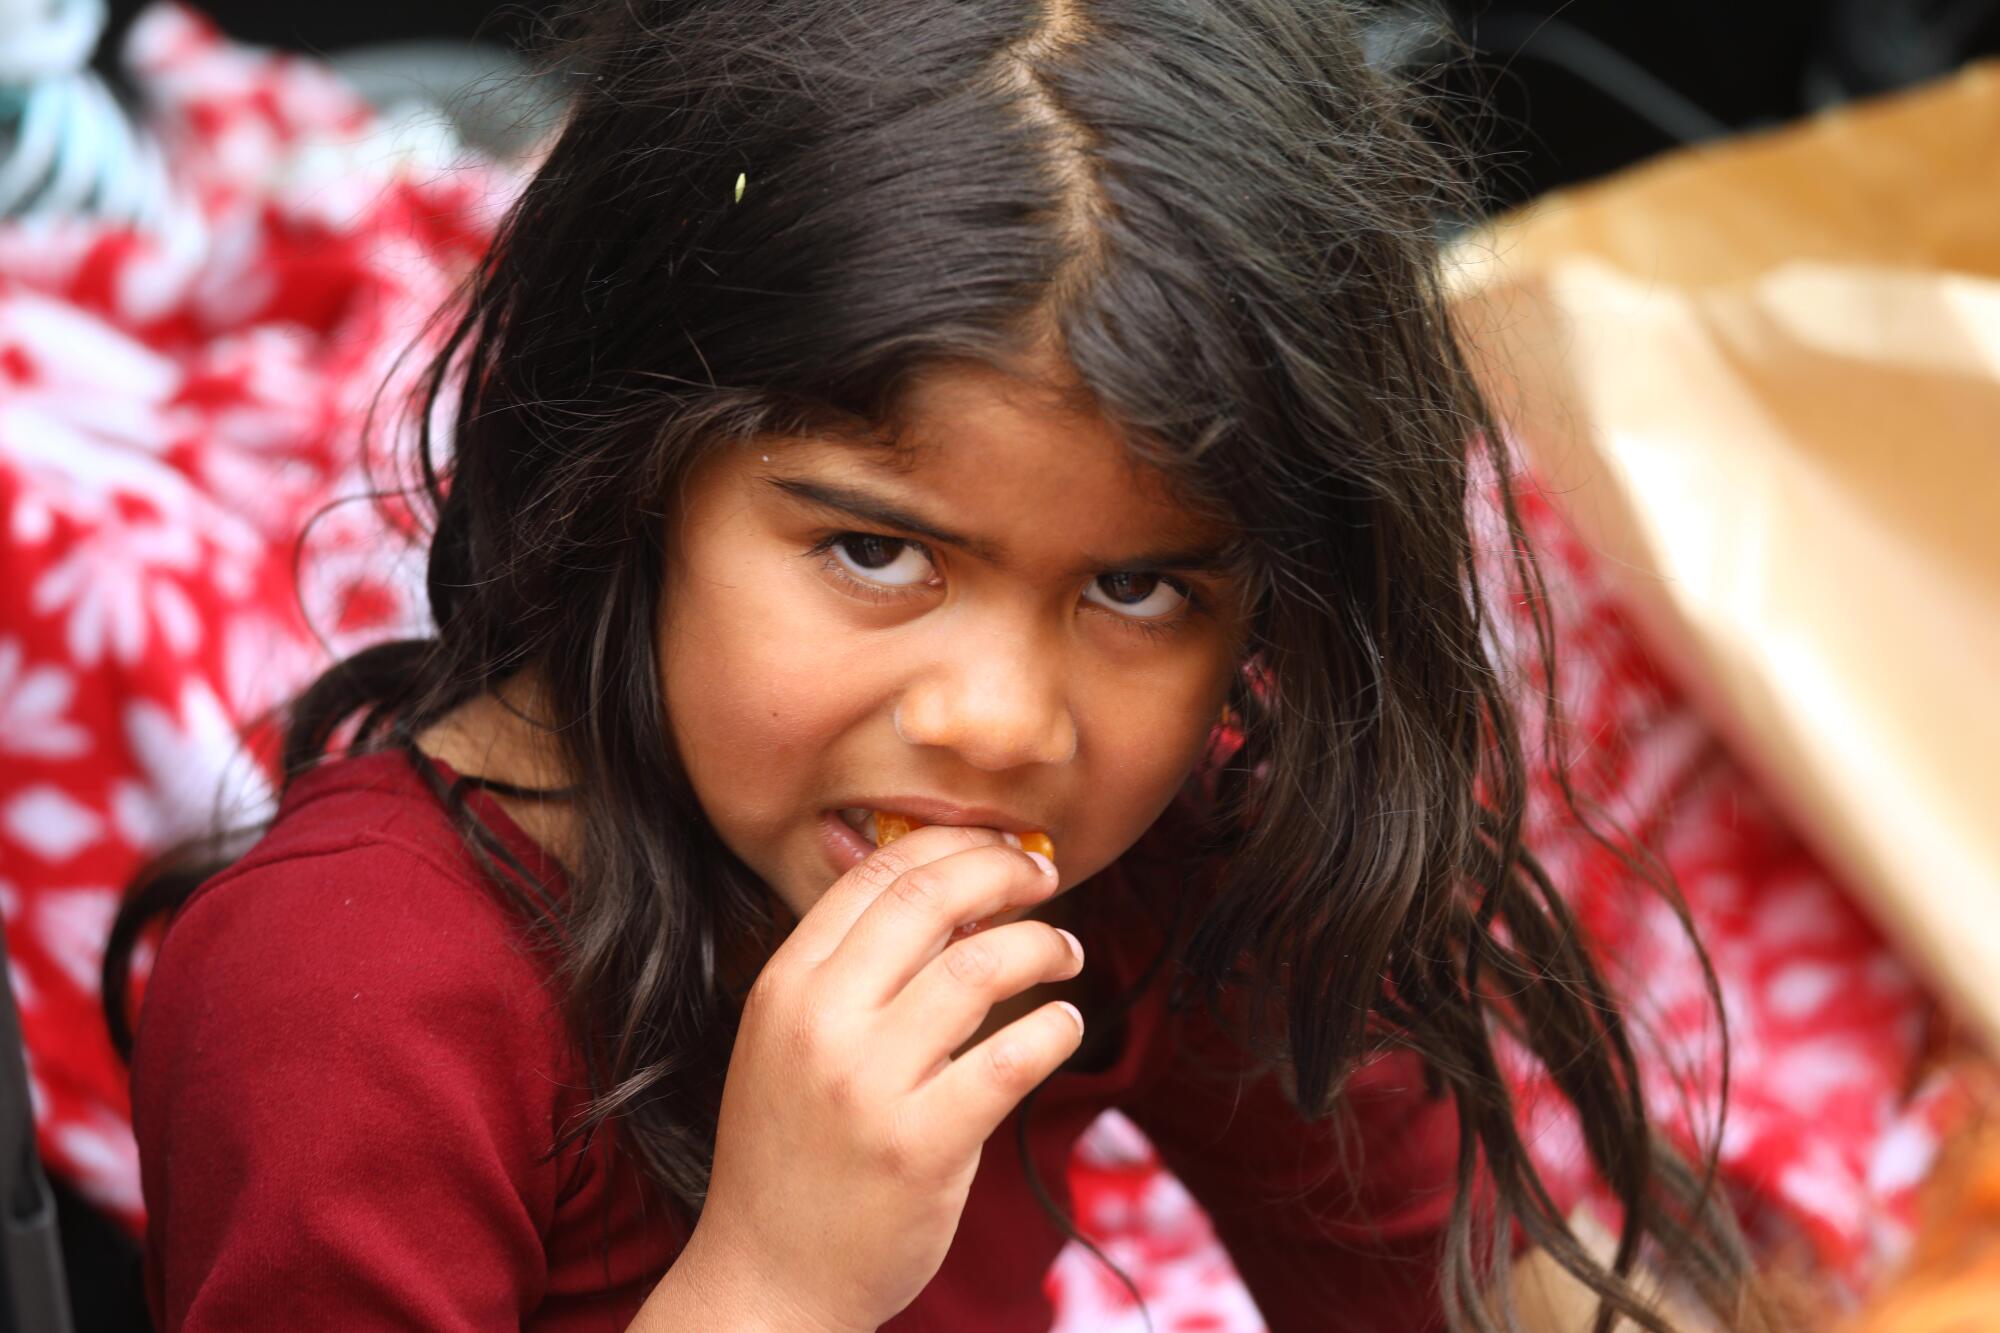 Migrant child Celeste, 5, eats a tangerine inside the car where she has been living 